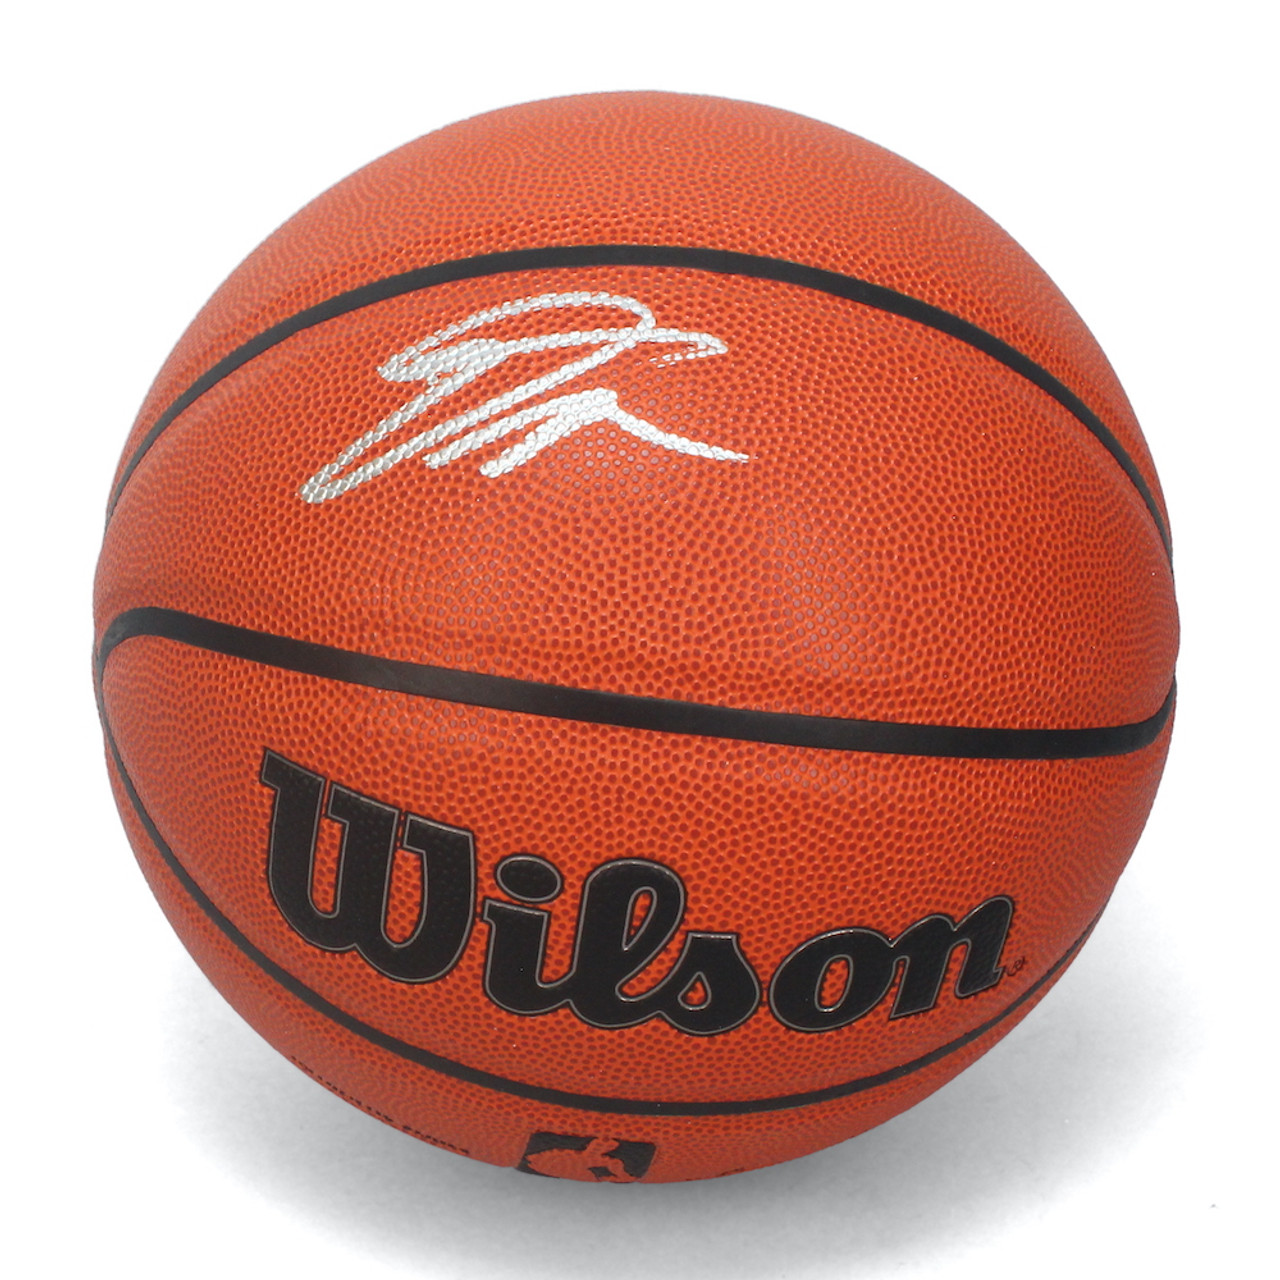 Donovan Mitchell Cleveland Cavaliers Autographed Fanatics Authentic Nike  Icon Swingman Jersey